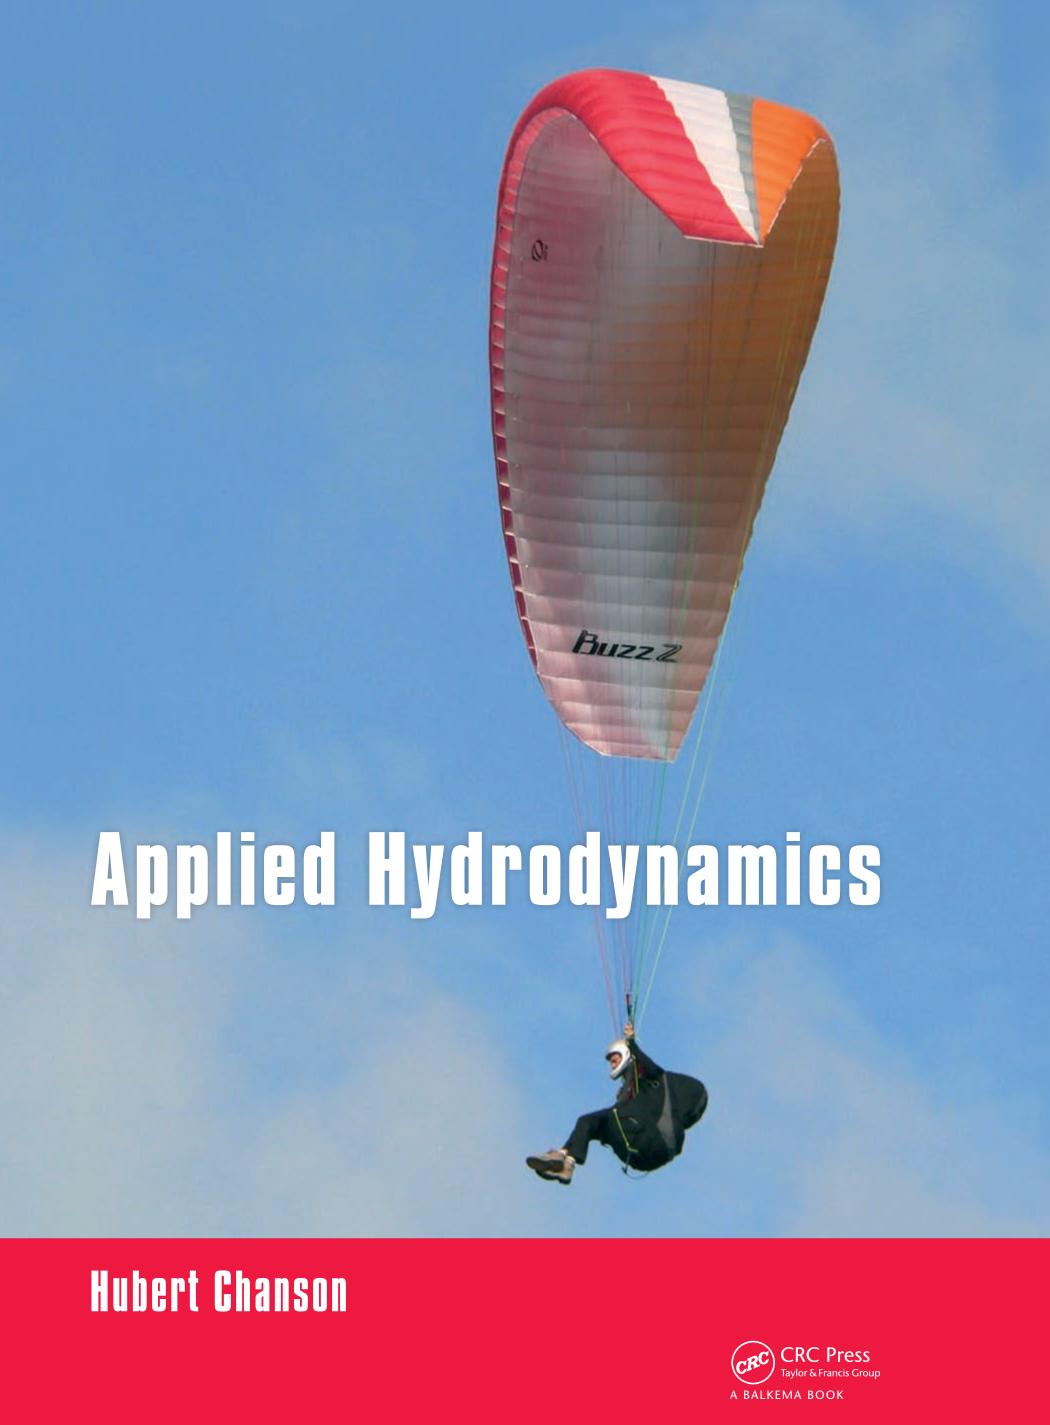 Applied hydrodynamics : an introduction